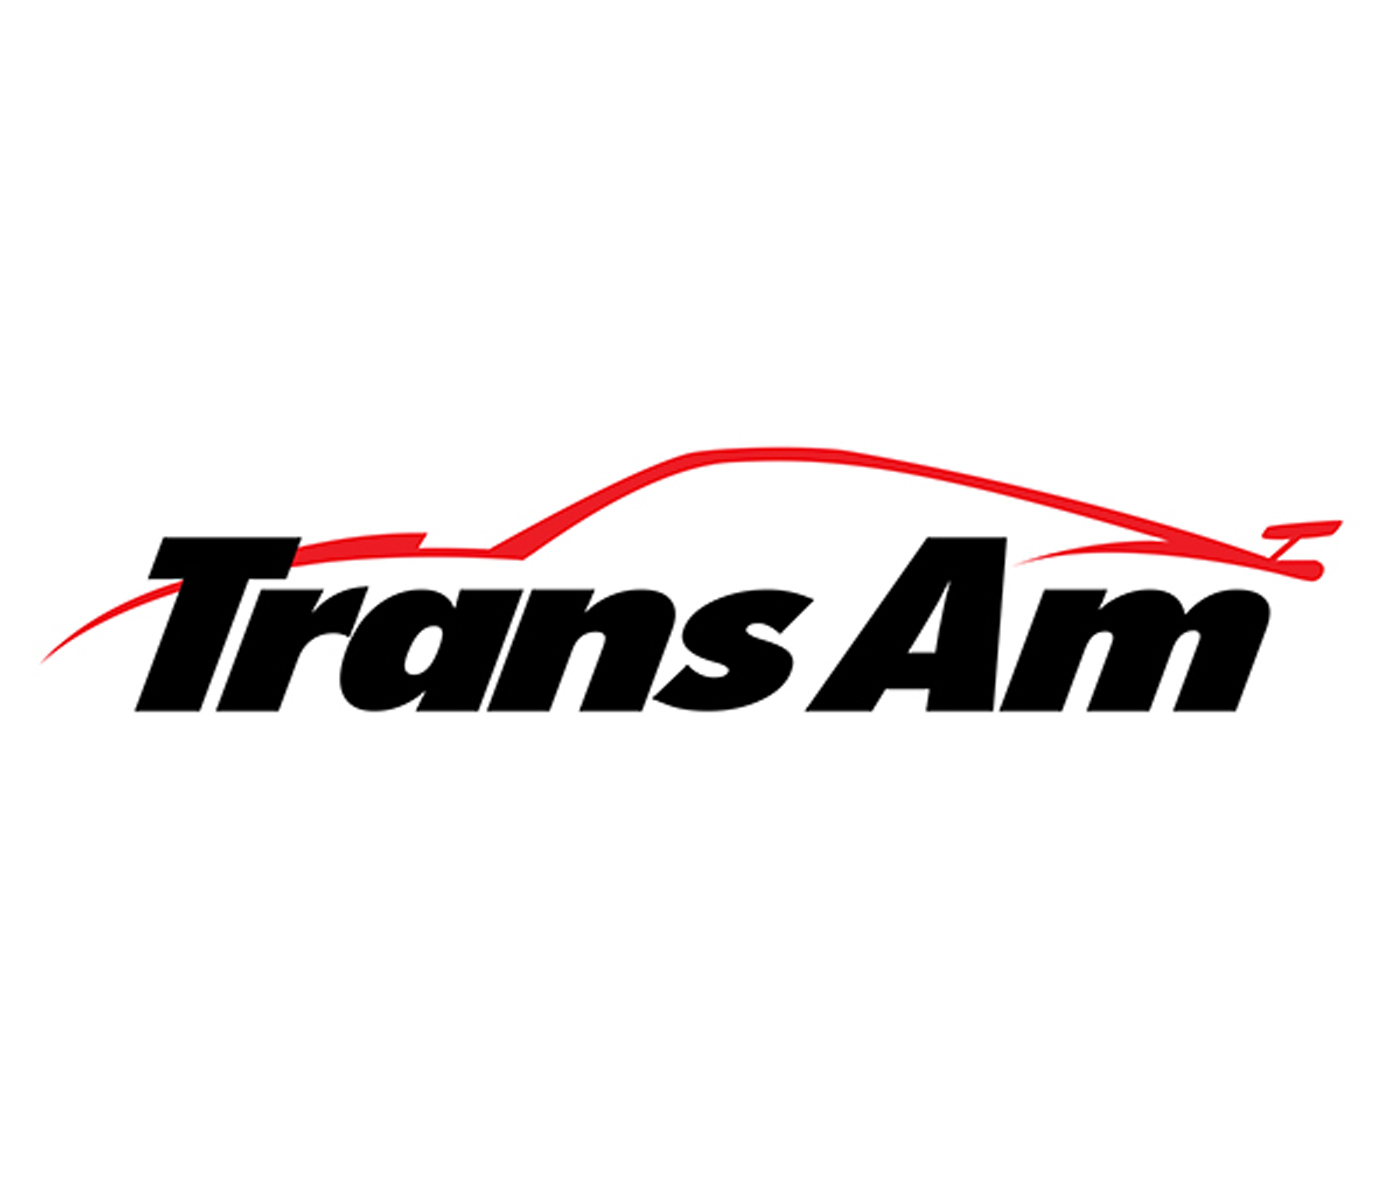 Trans Am